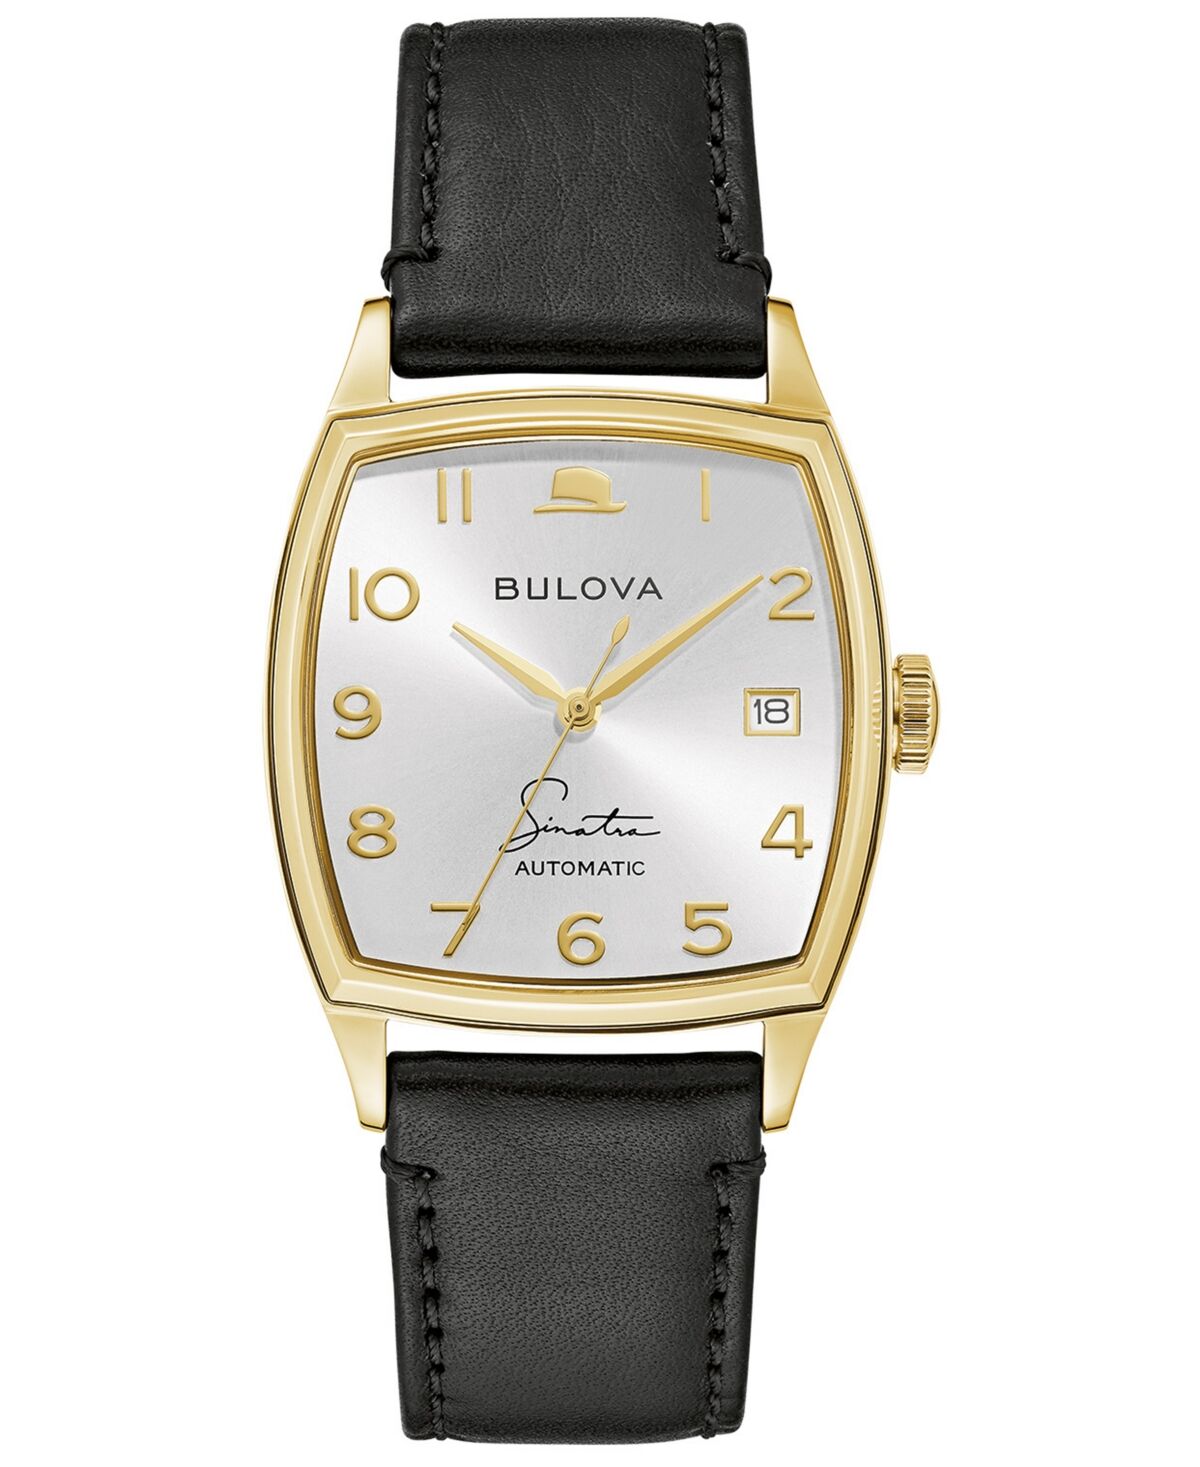 Bulova Men's Frank Sinatra Automatic Black Leather Strap Watch 45x33.5mm - Black